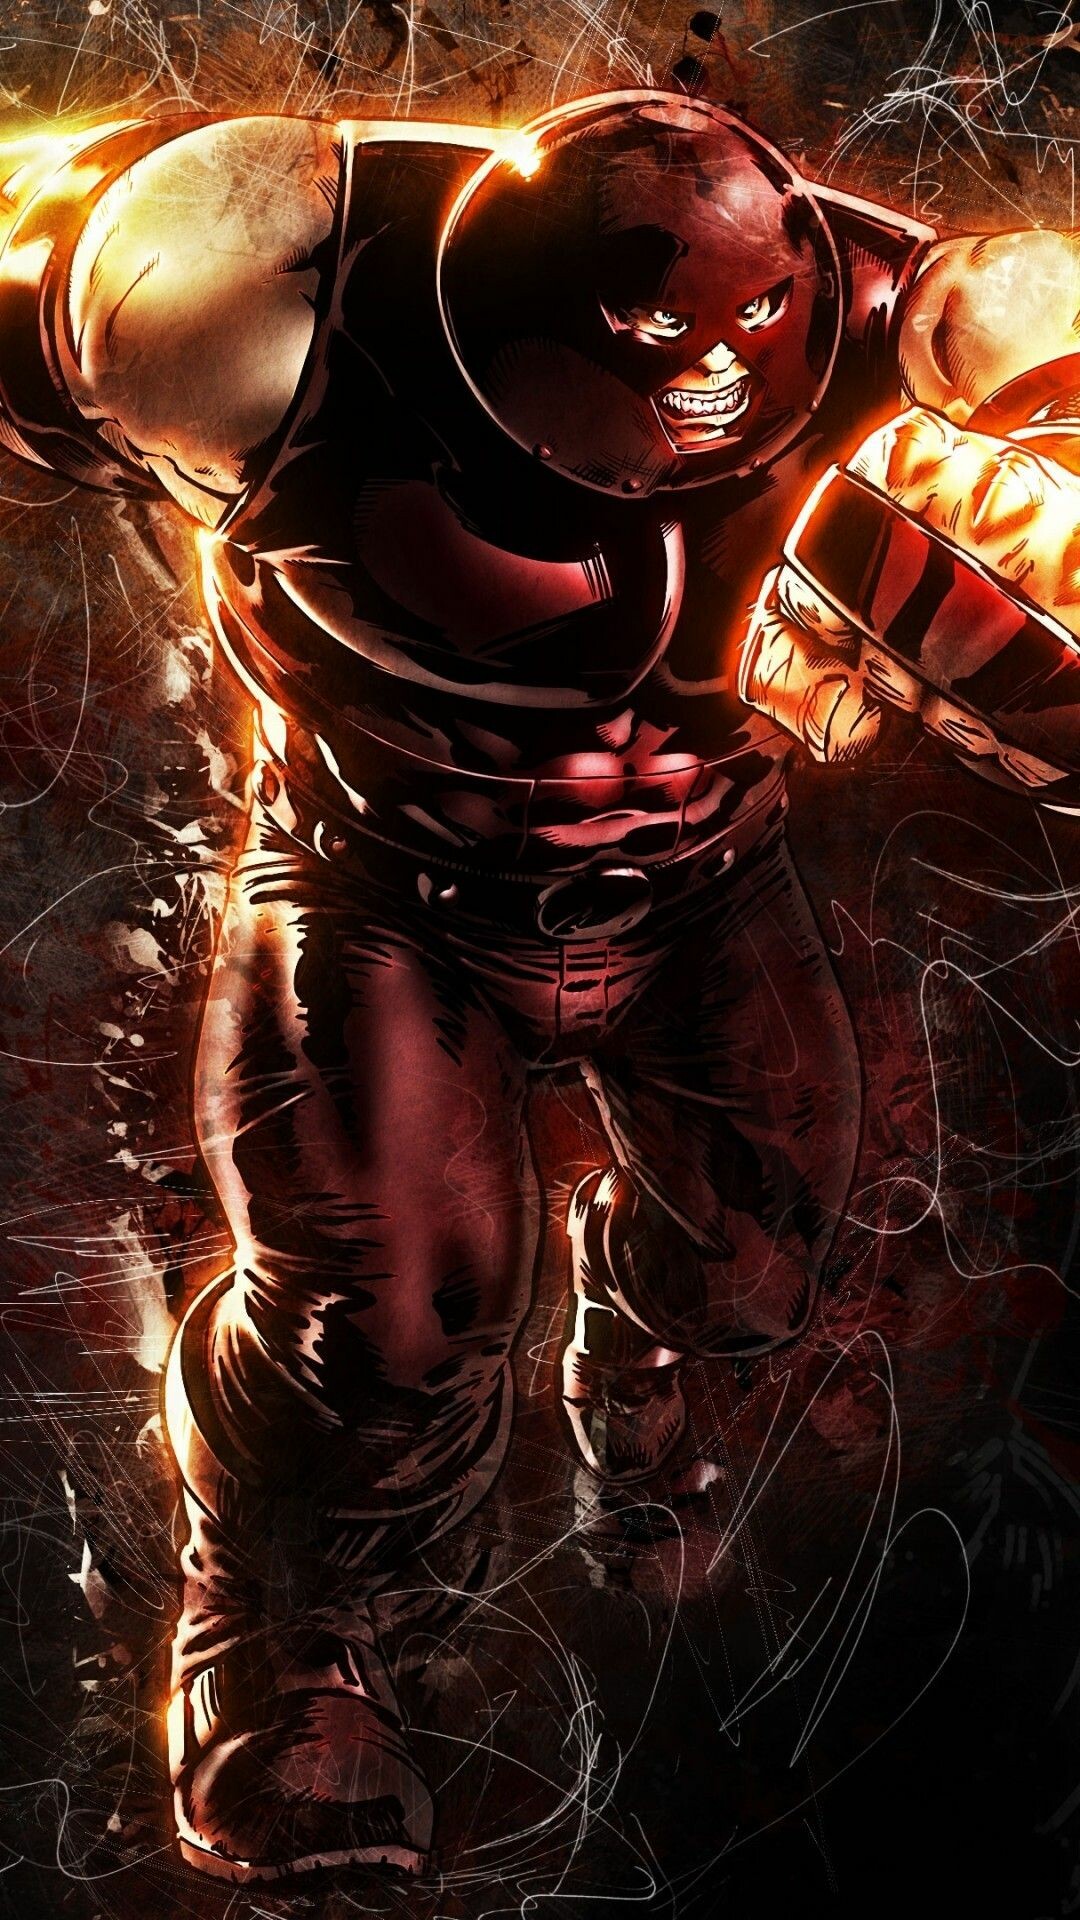 Marvel Villain: Juggernaut, Created by writer Stan Lee. 1080x1920 Full HD Wallpaper.